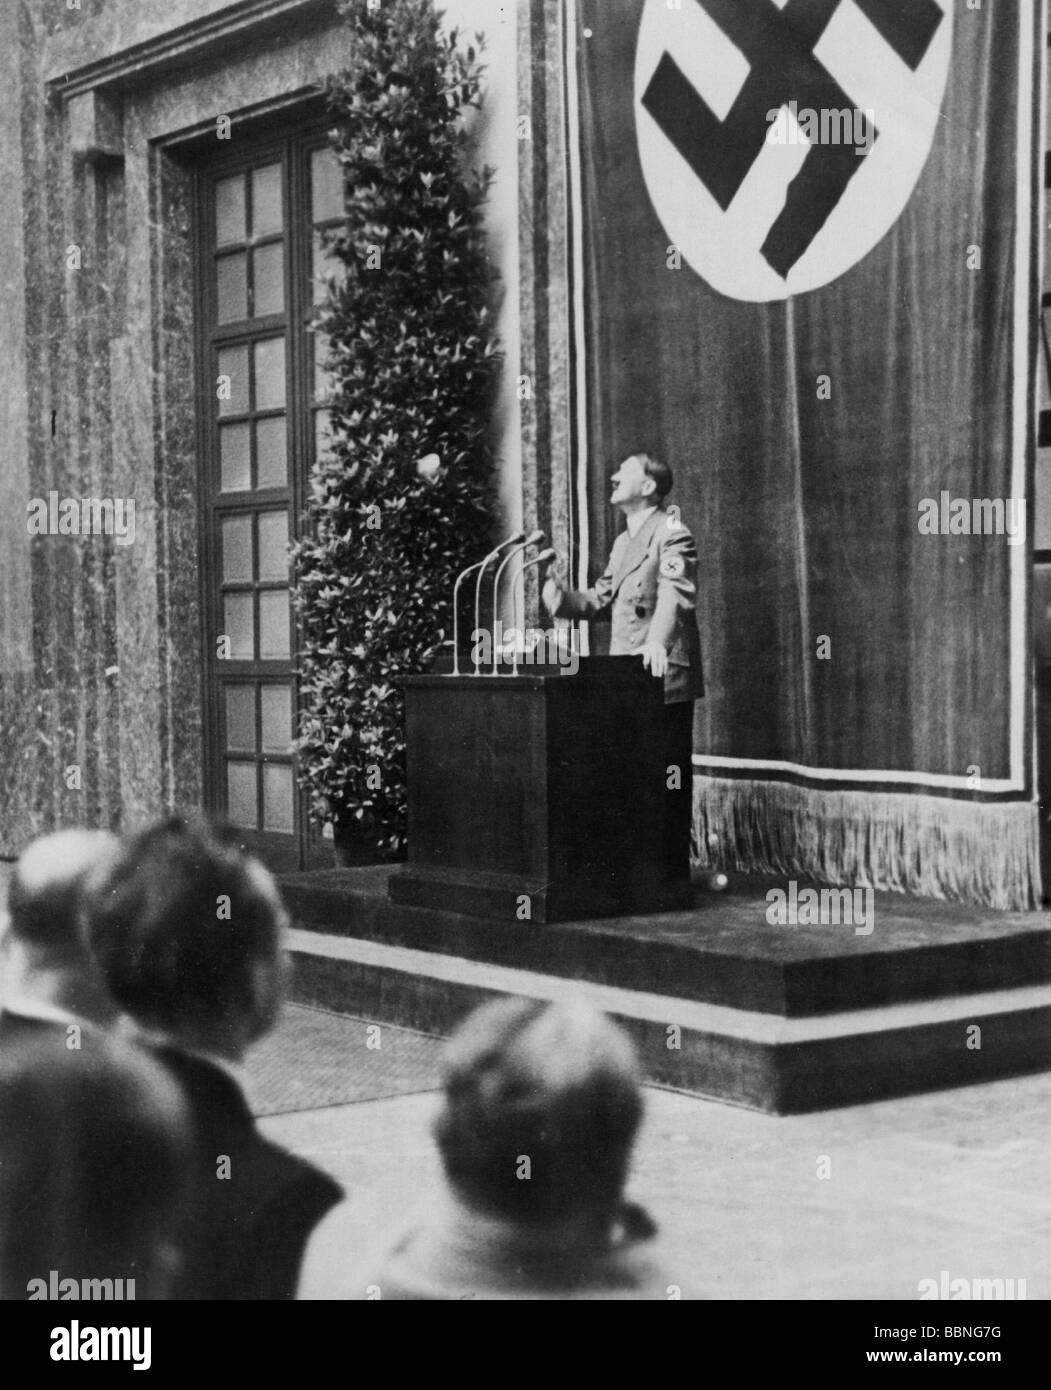 Hitler, Adolf, 20.4.1889 - 30.4.1945, German politician (NSDAP), during the opening of the 'Haus der deutschen Kunst' (House of German Art), Munich, 16.10.1938, half length, Stock Photo